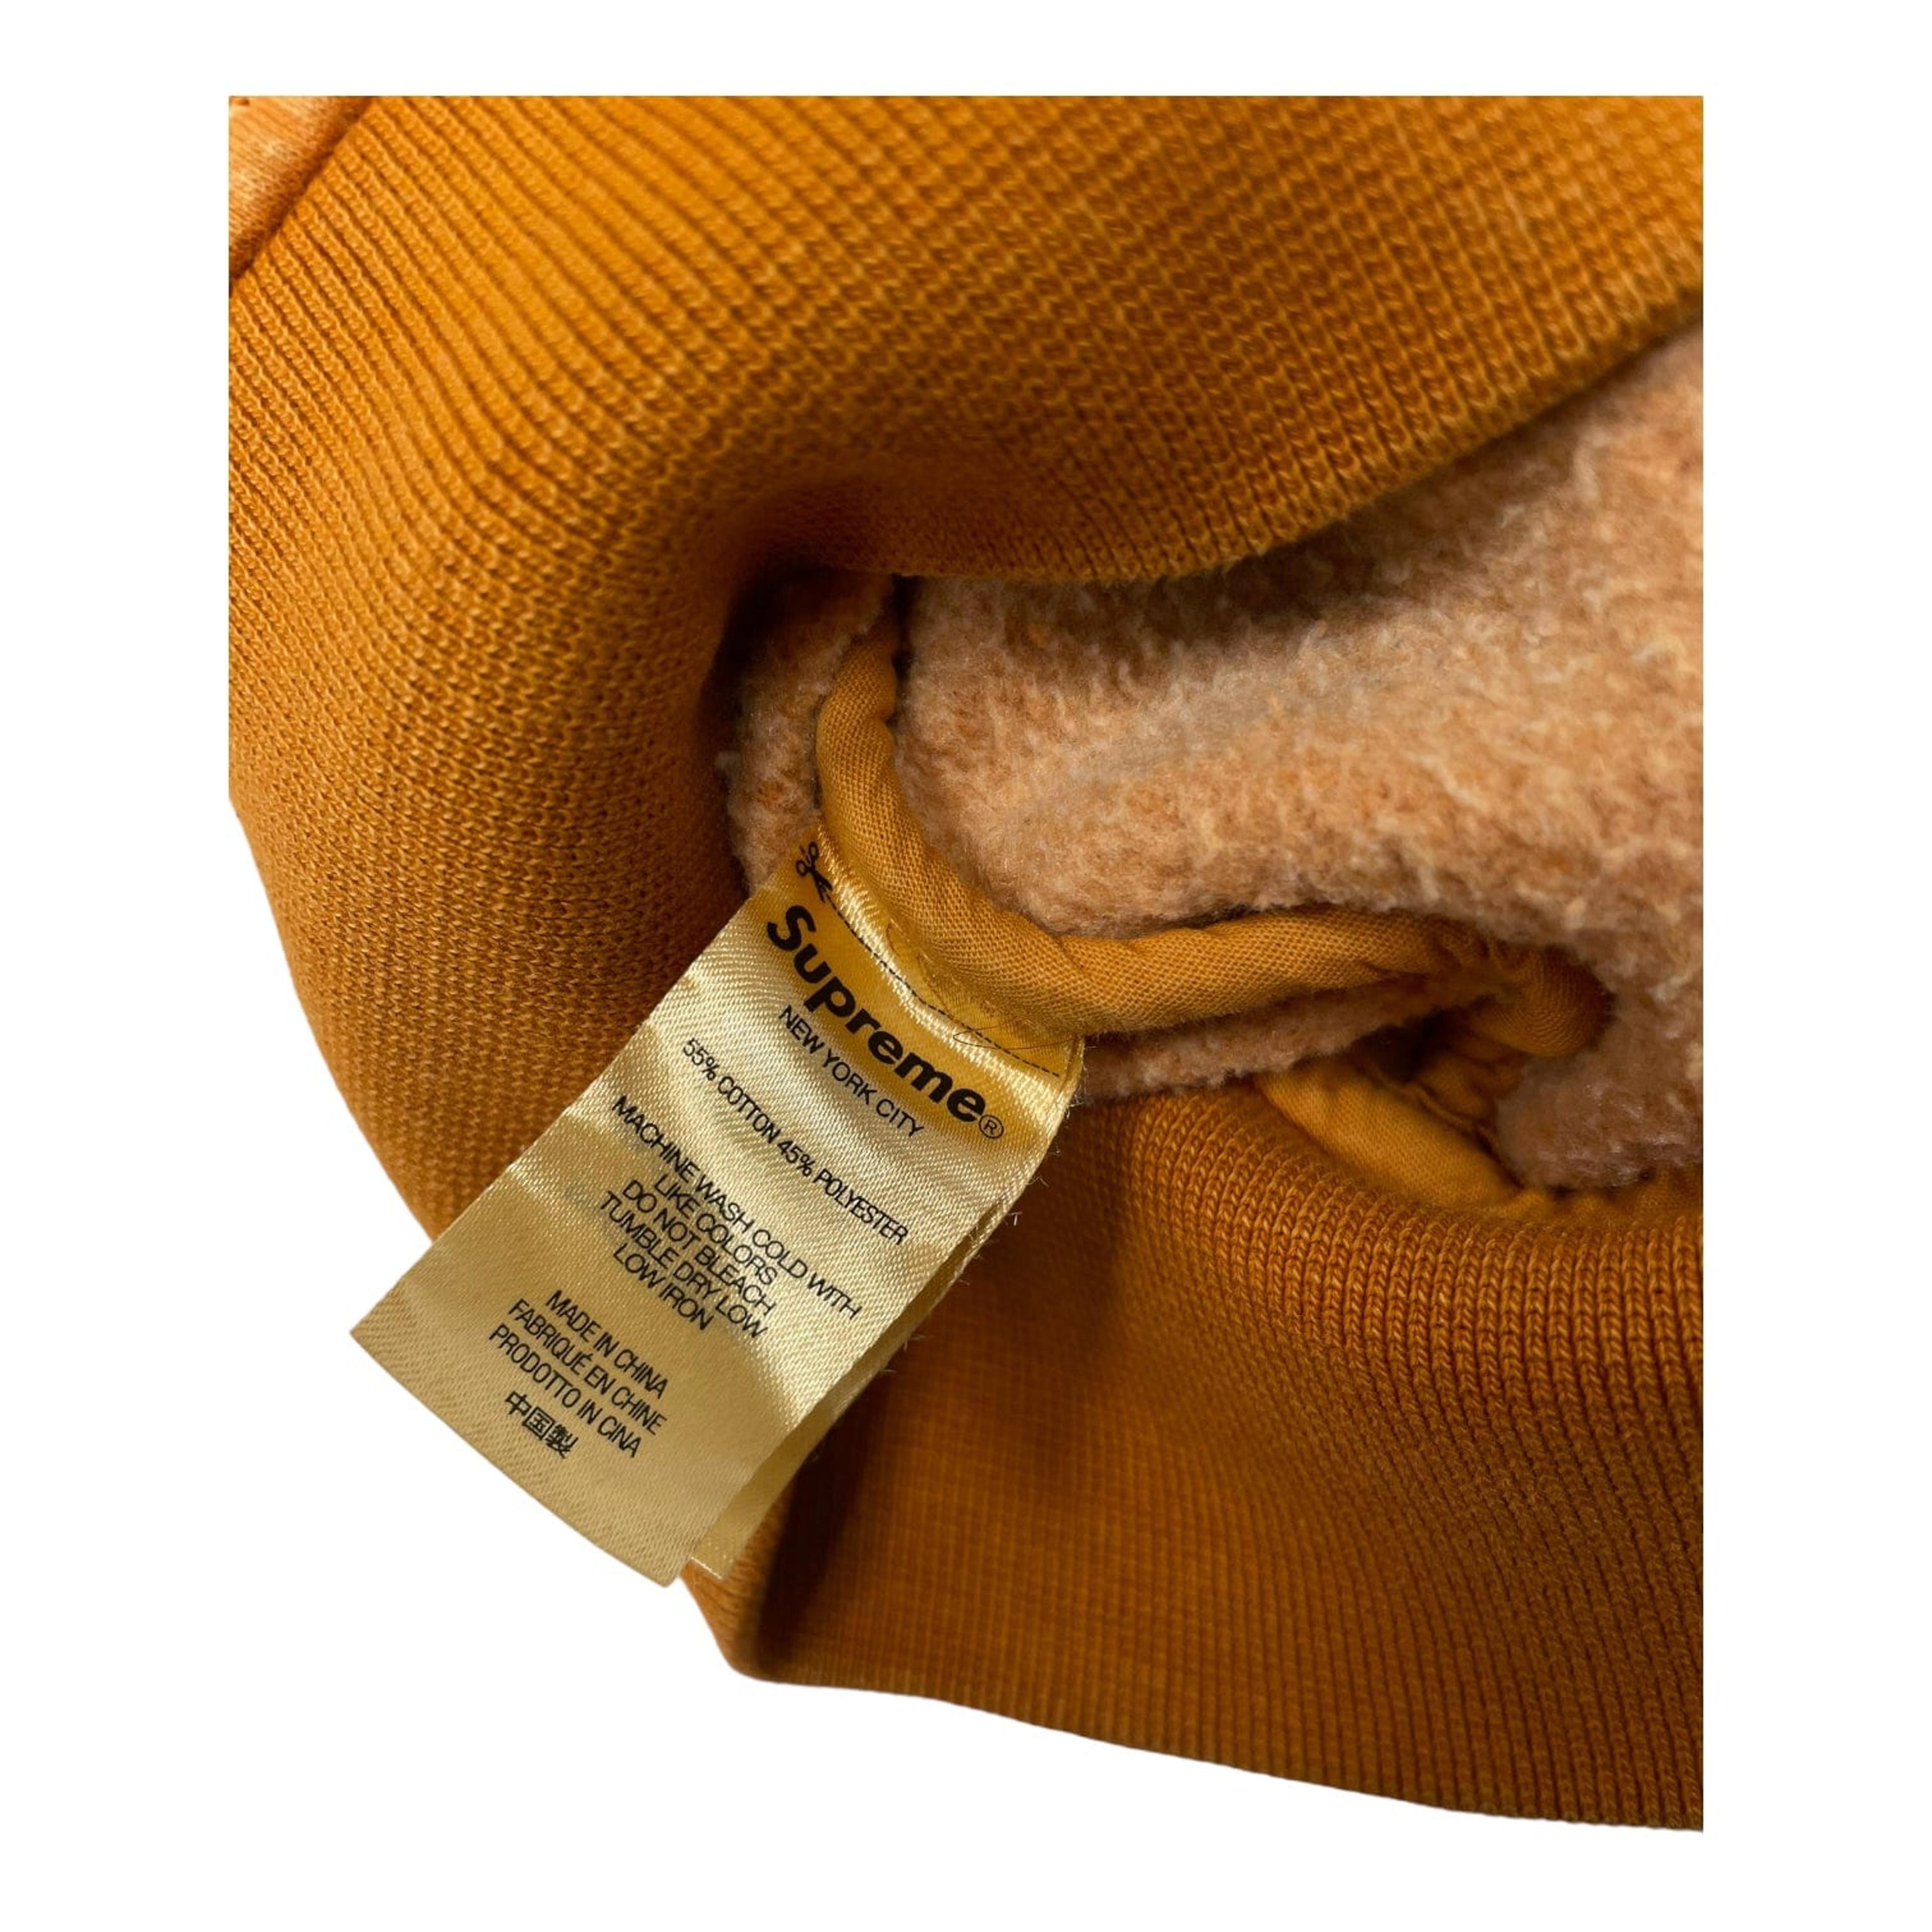 Alternate View 3 of Supreme True Religion Zip Up Hooded Sweatshirt Dusty Orange Pre-